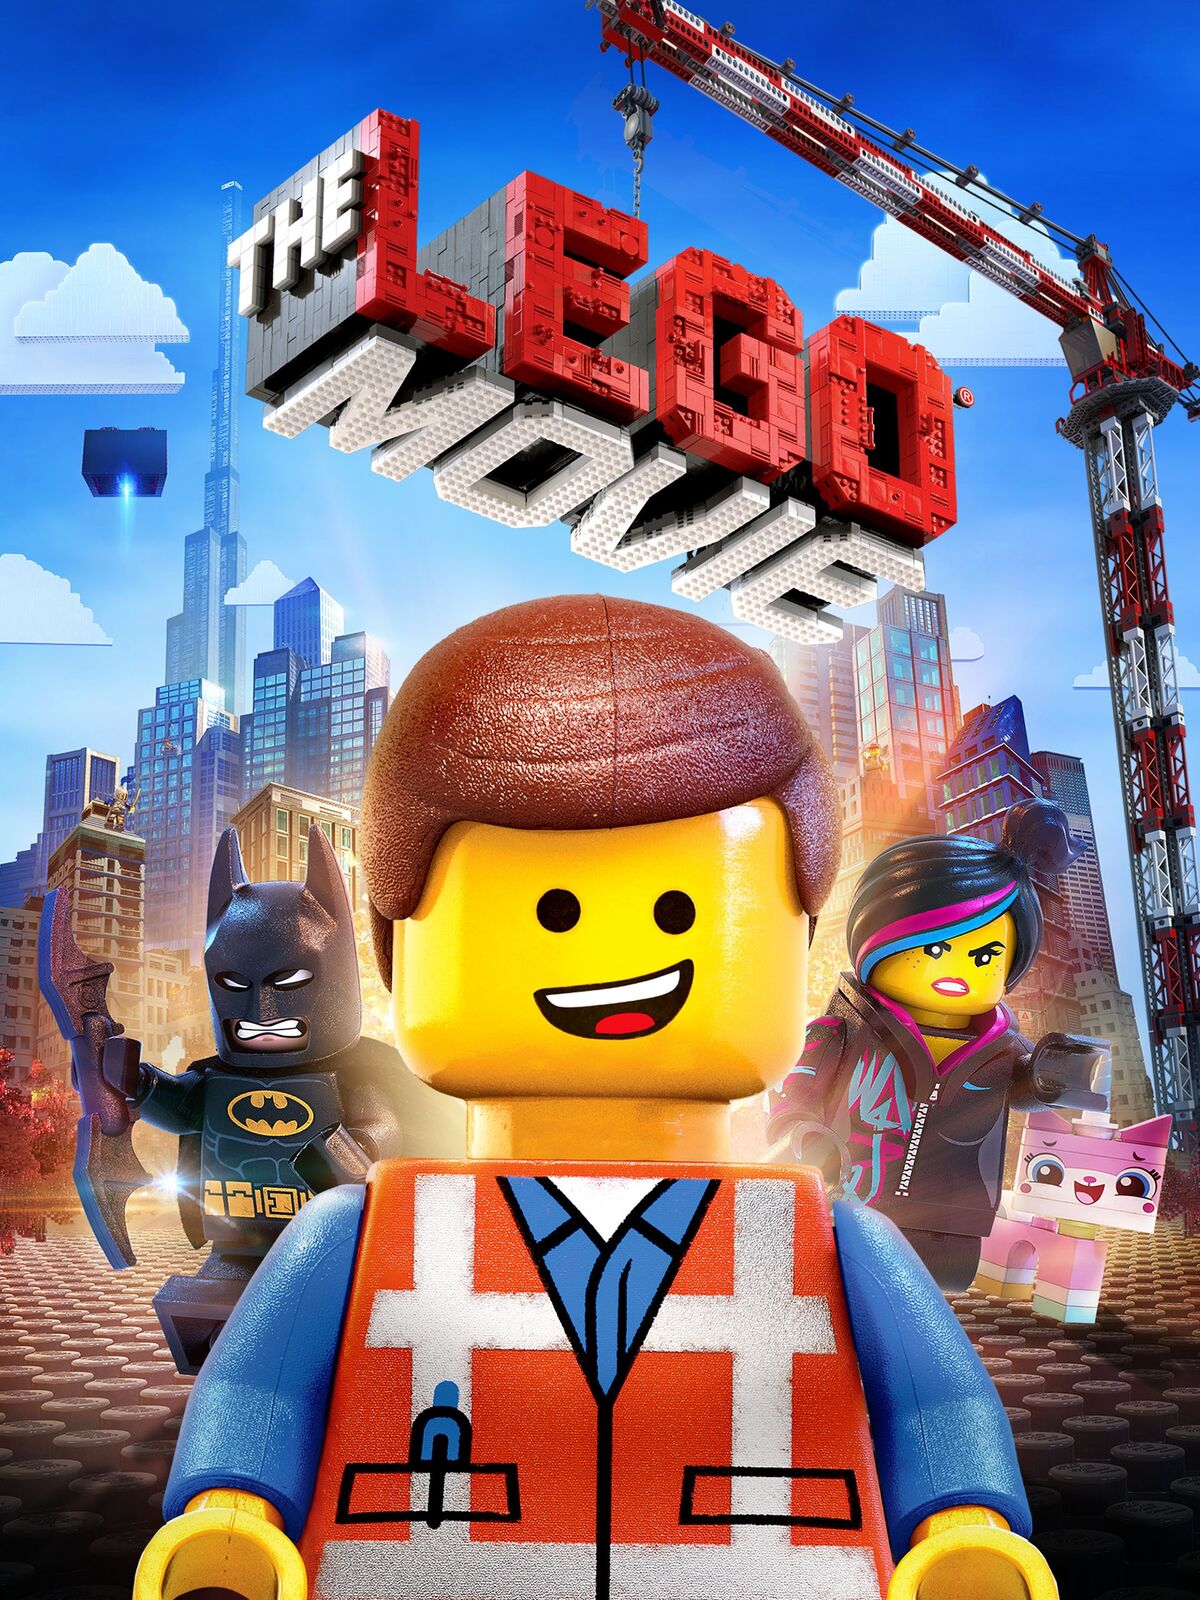 LEGO Nexo Knights (TV Series 2015–2017) - IMDb